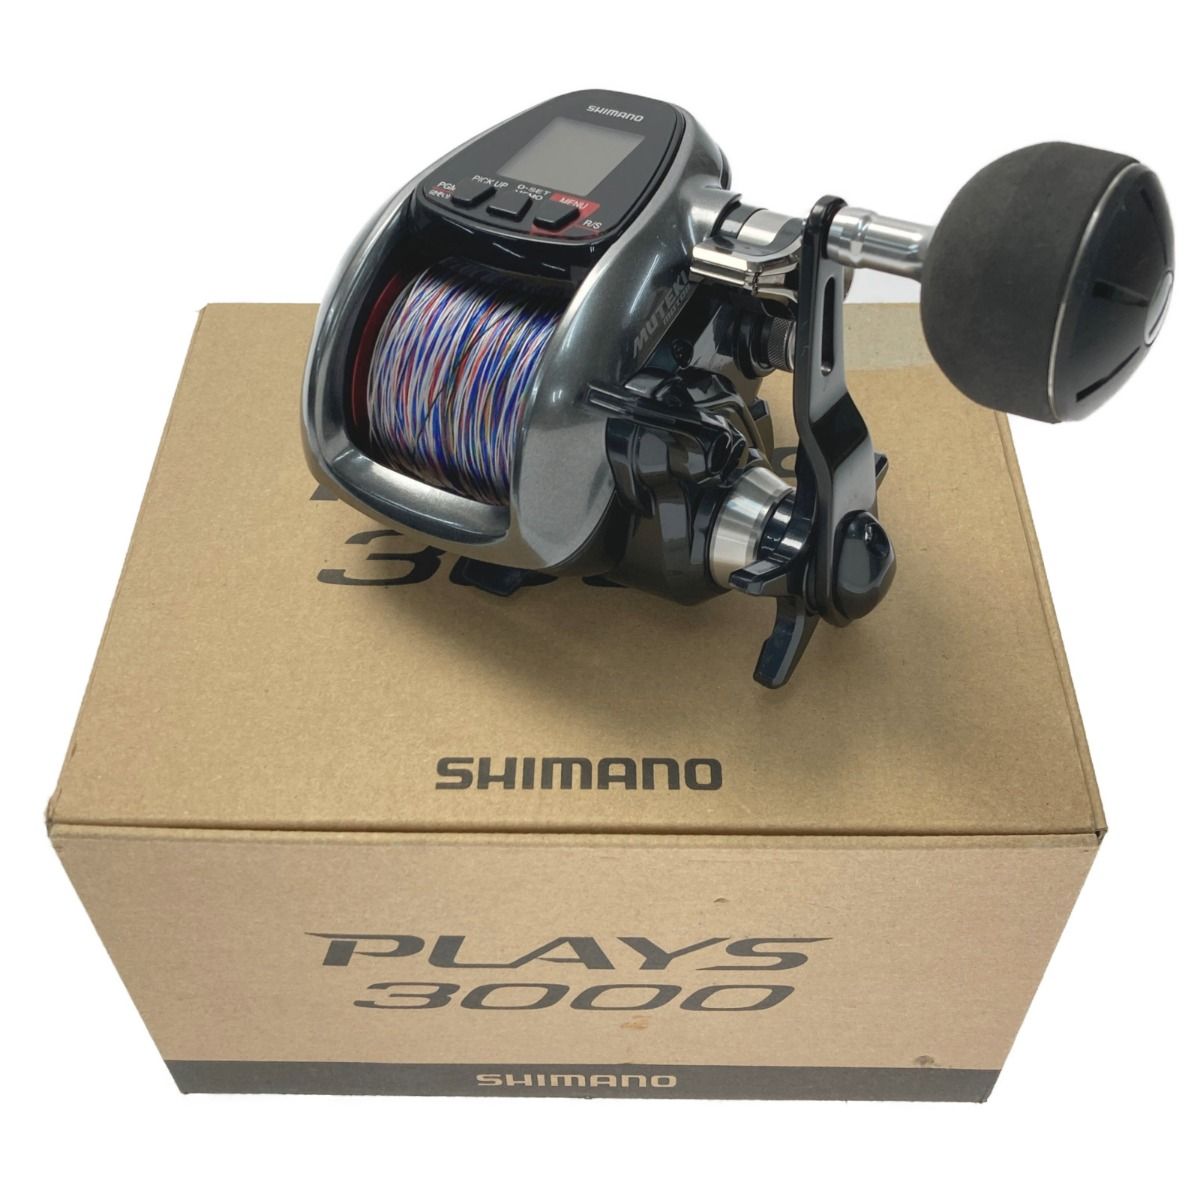 SHIMANO シマノ 16 PLAYS 3000 電動リール 箱・コード付き 03620 